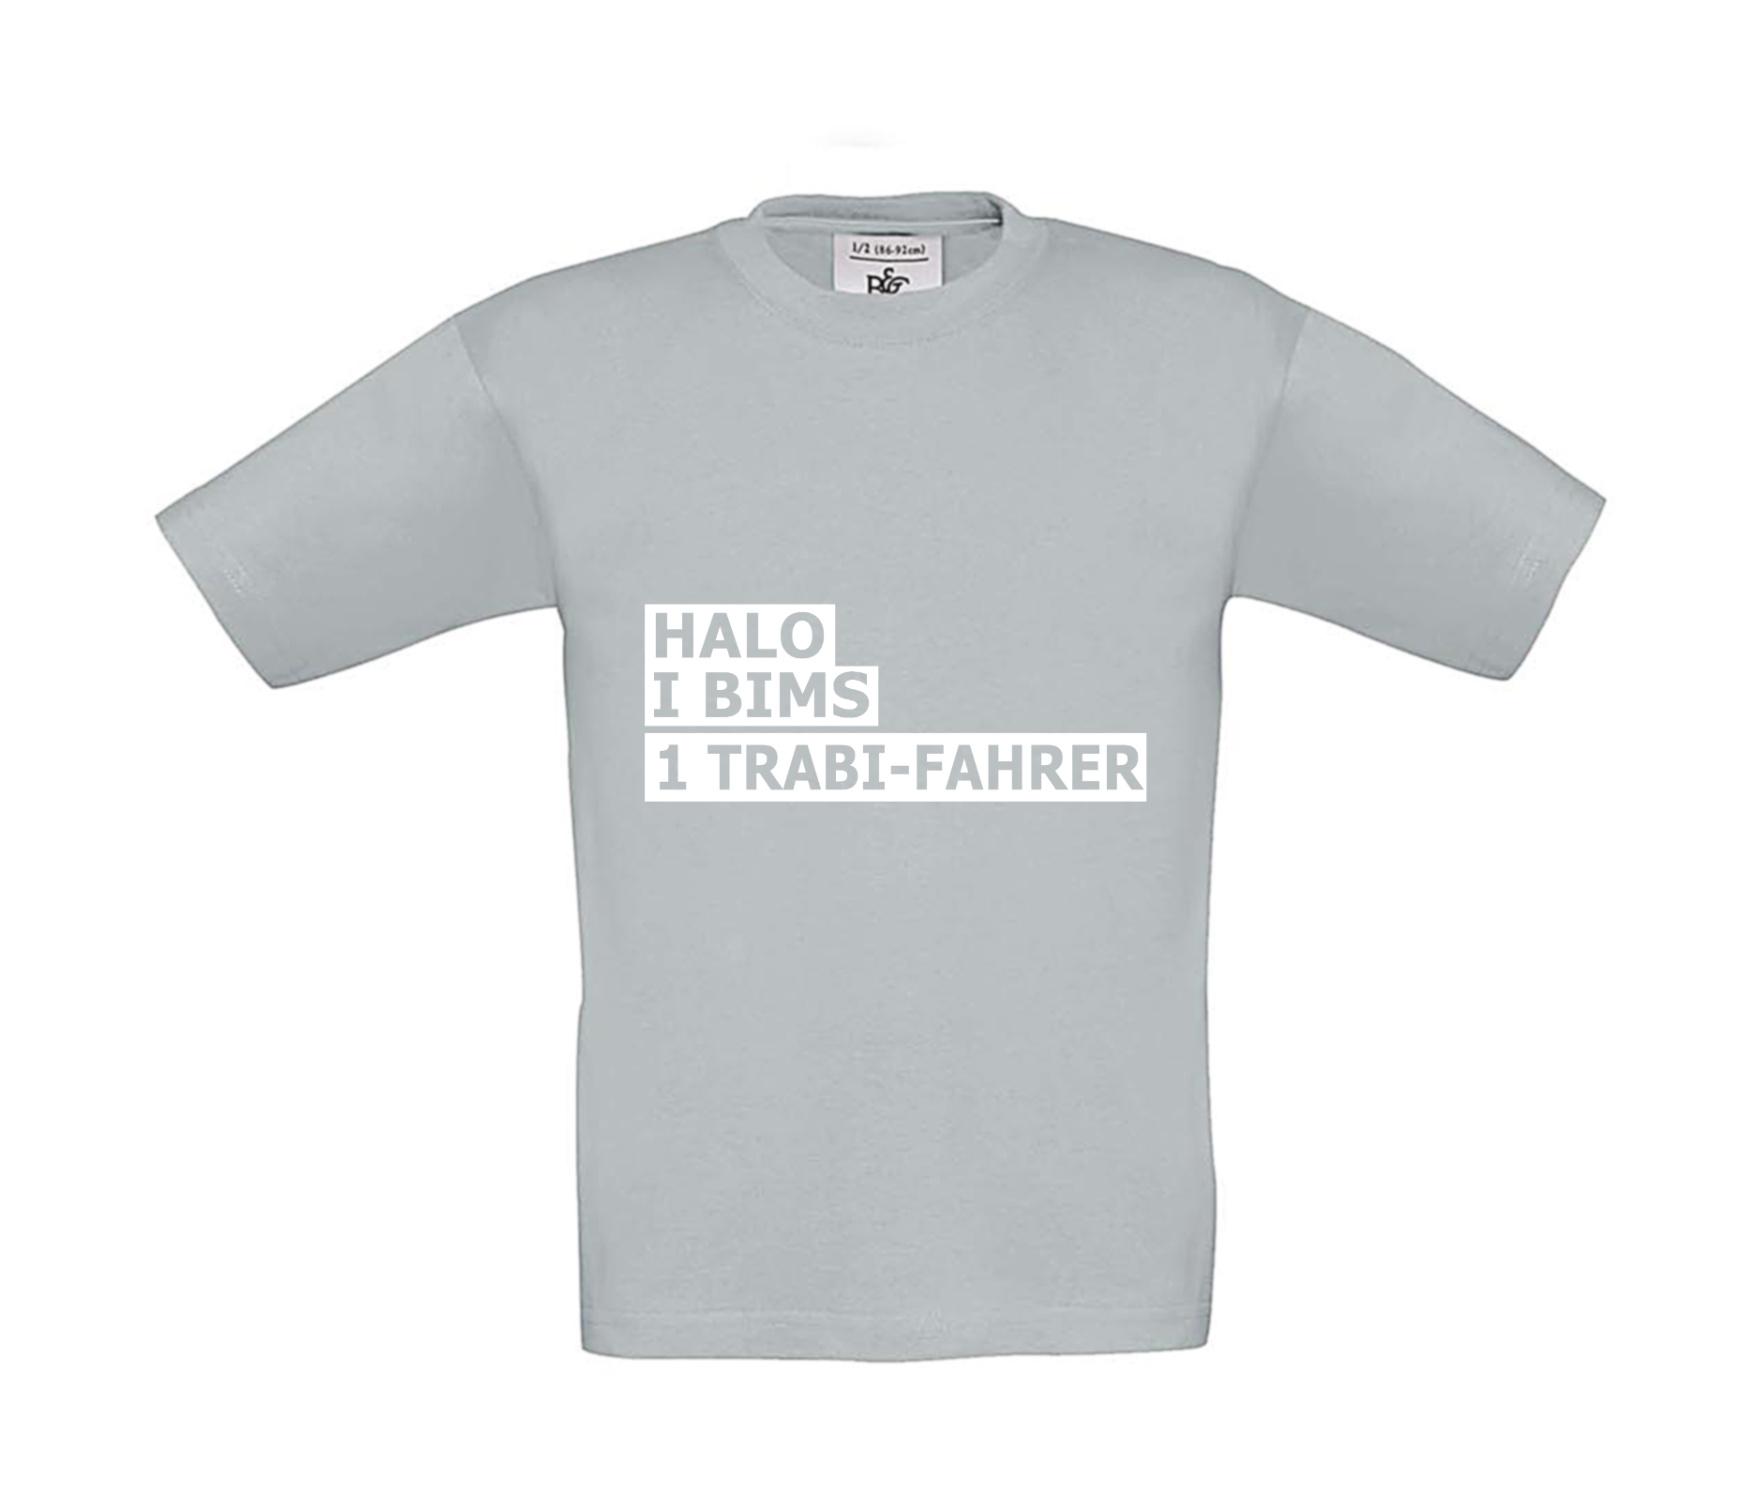 T-Shirt Kinder 2Takter - Halo I bims 1 Trabi-Fahrer